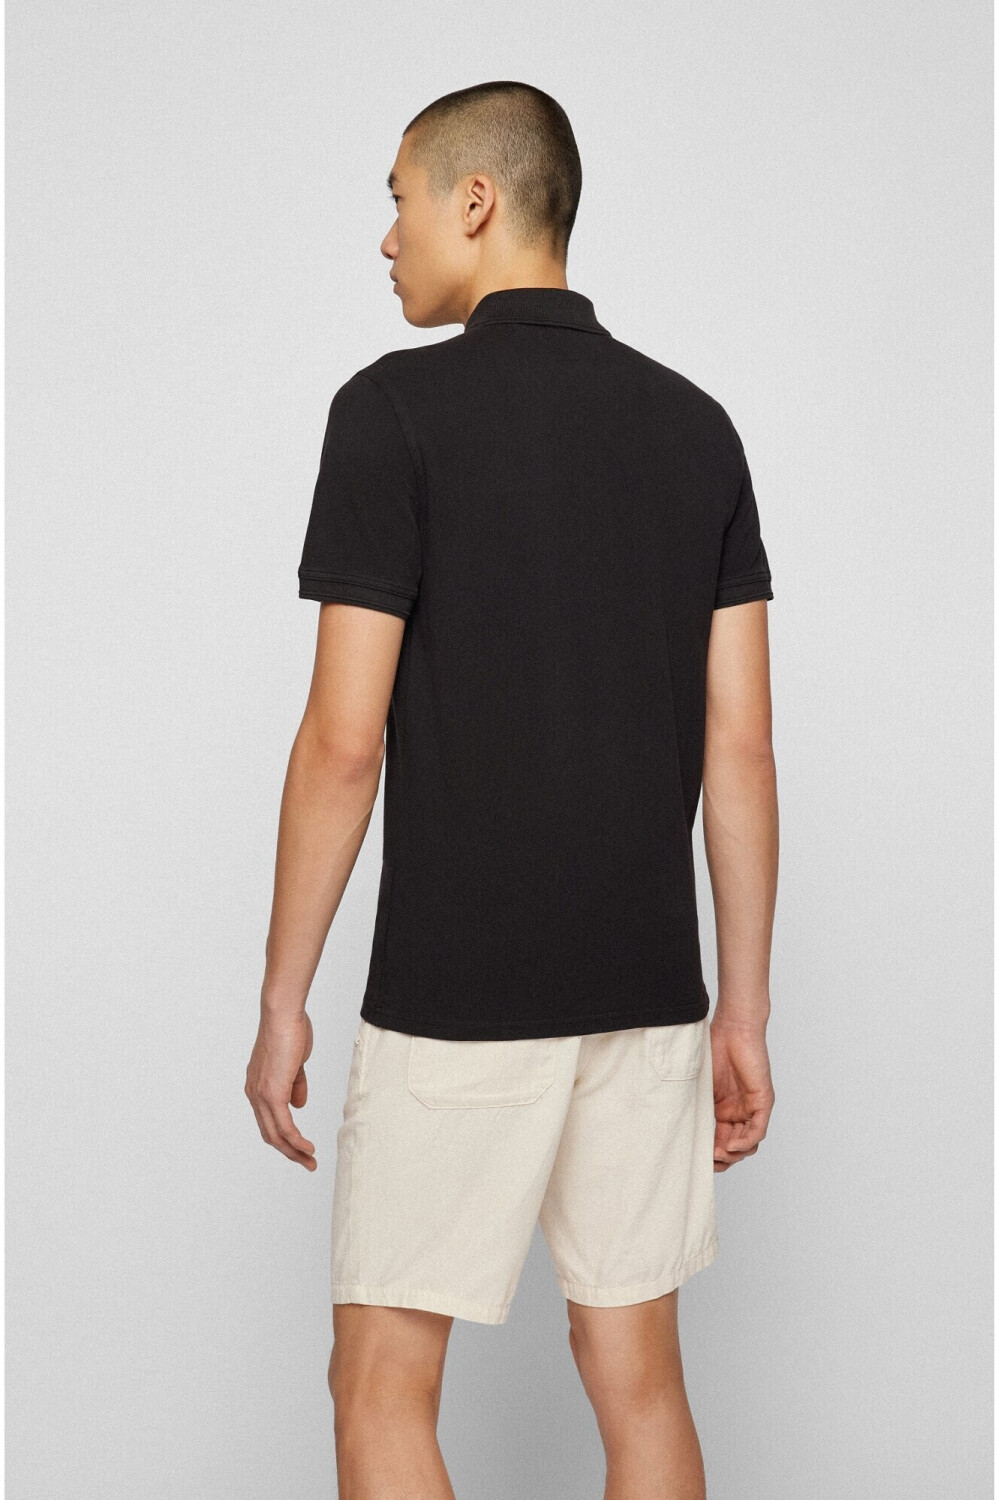 Hugo Boss Prime Slim-Fit Poloshirt € | ab bei Preisvergleich (50468576-001) black 48,00